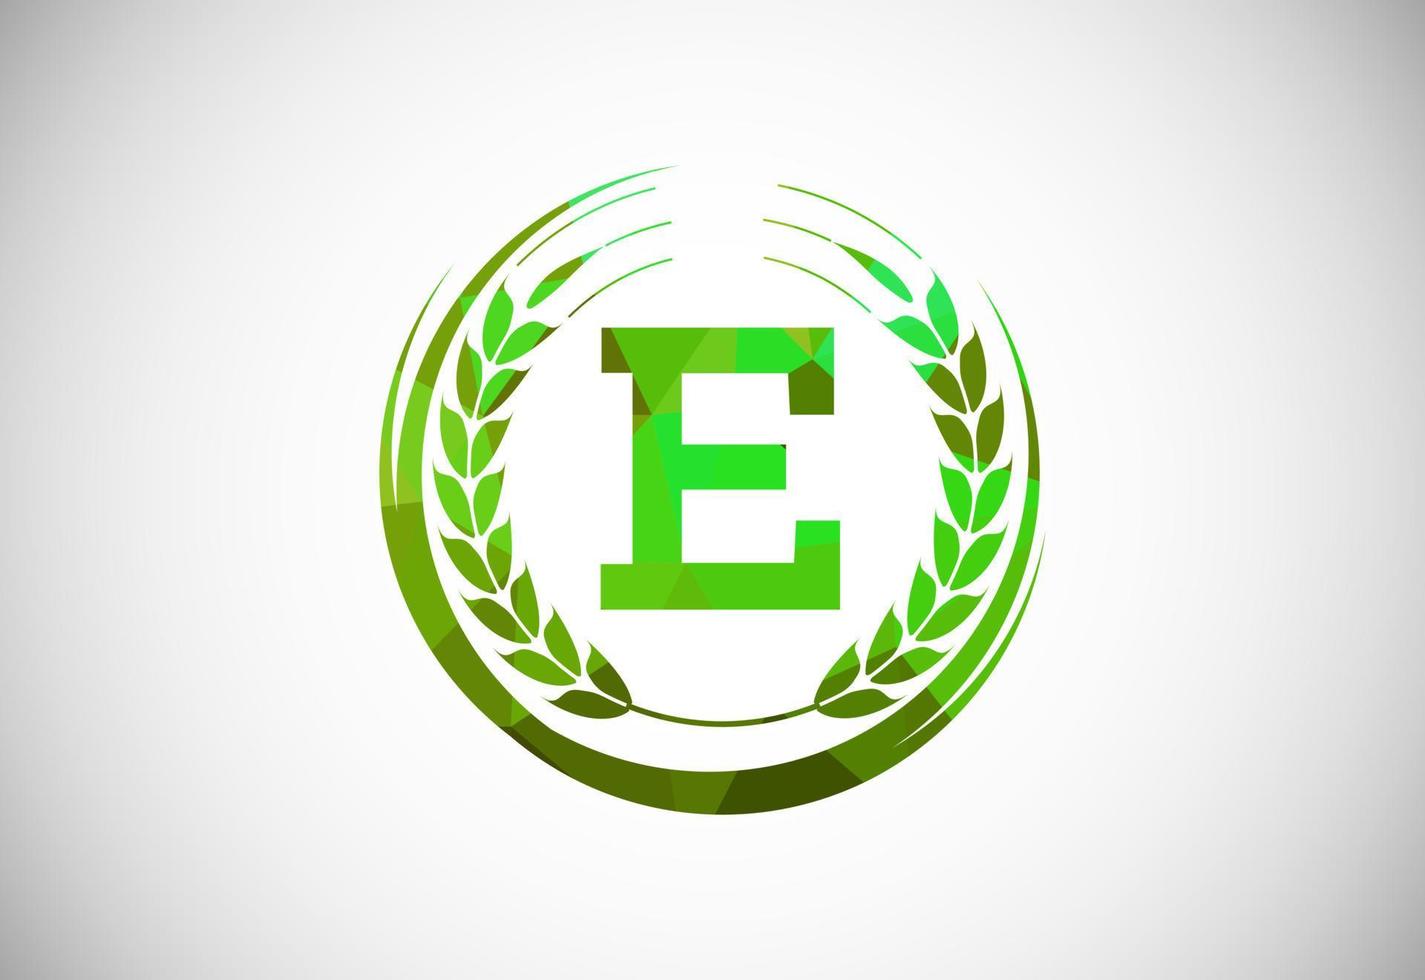 Alphabet E sign with a wheat wreath. Polygonal low poly organic wheat farming logo concept. Agriculture logo design vector template.